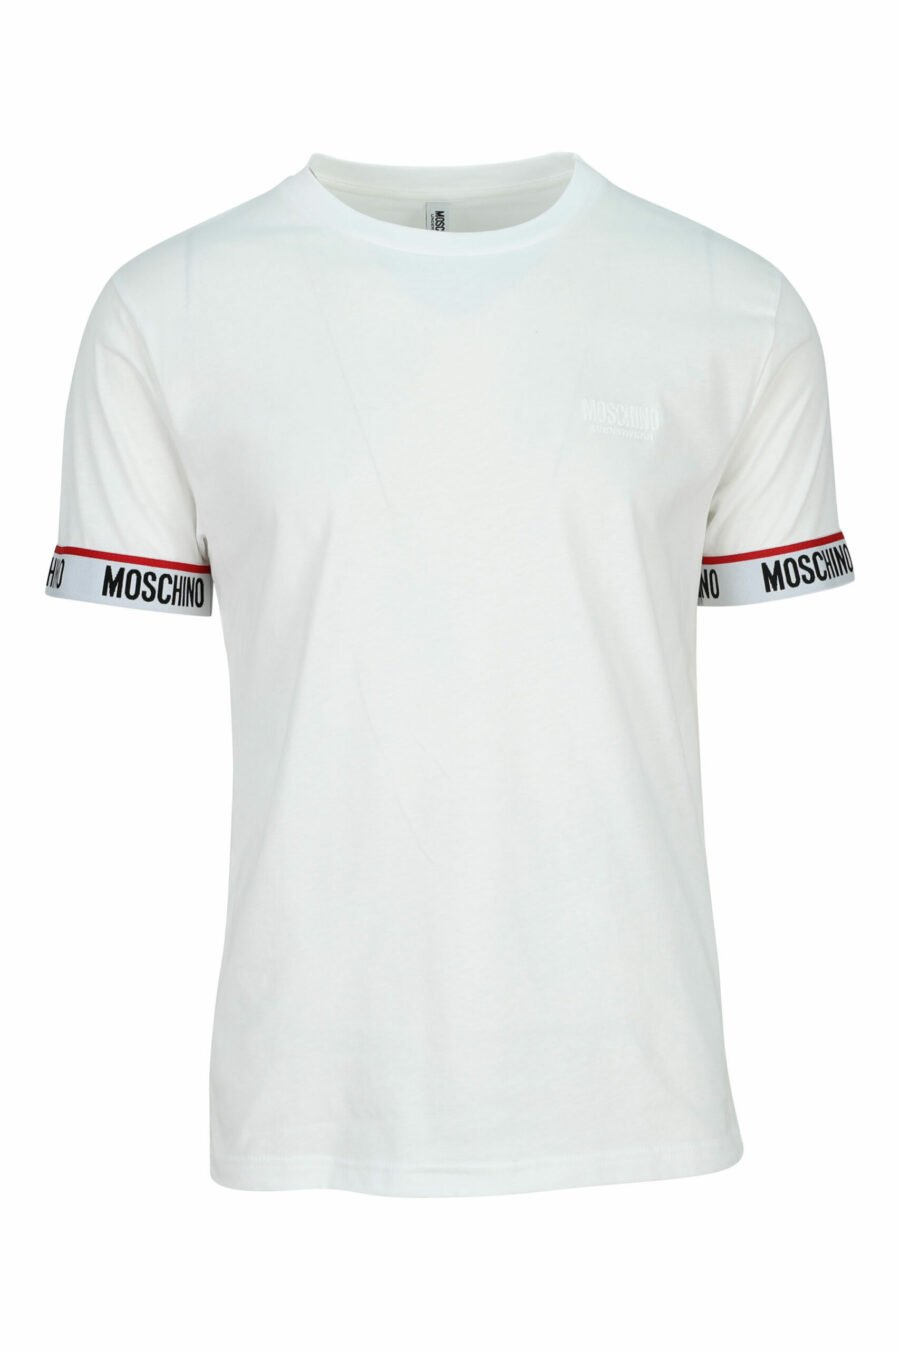 Tee-shirt blanc avec logo blanc sur les manches - 667113604565 échelonné